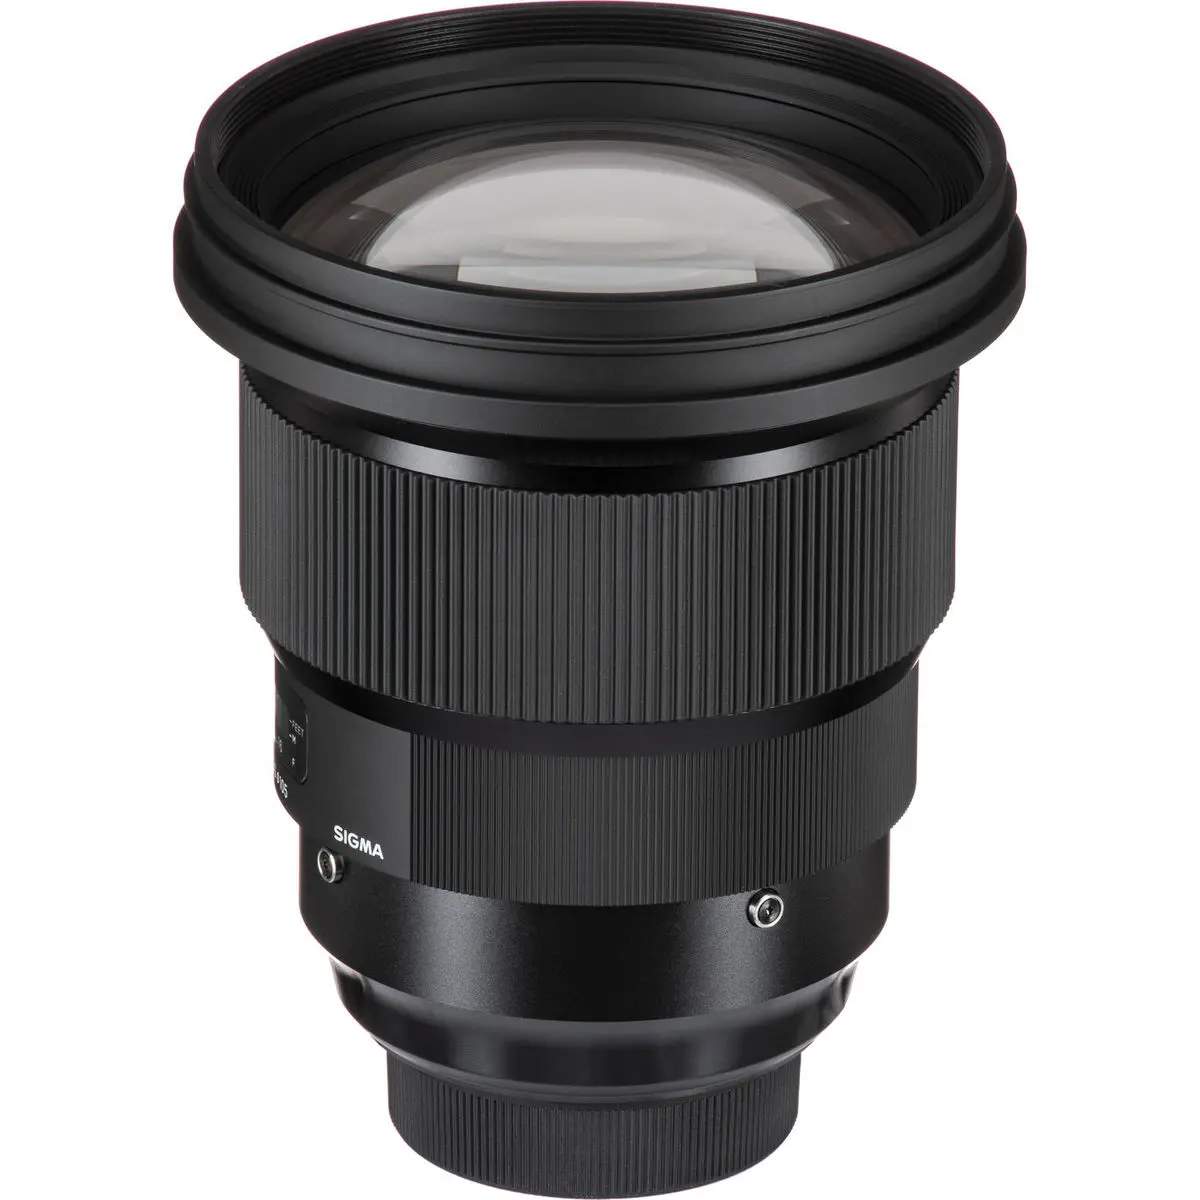 4. Sigma 105mm F1.4 DG HSM | Art (Canon) Lens